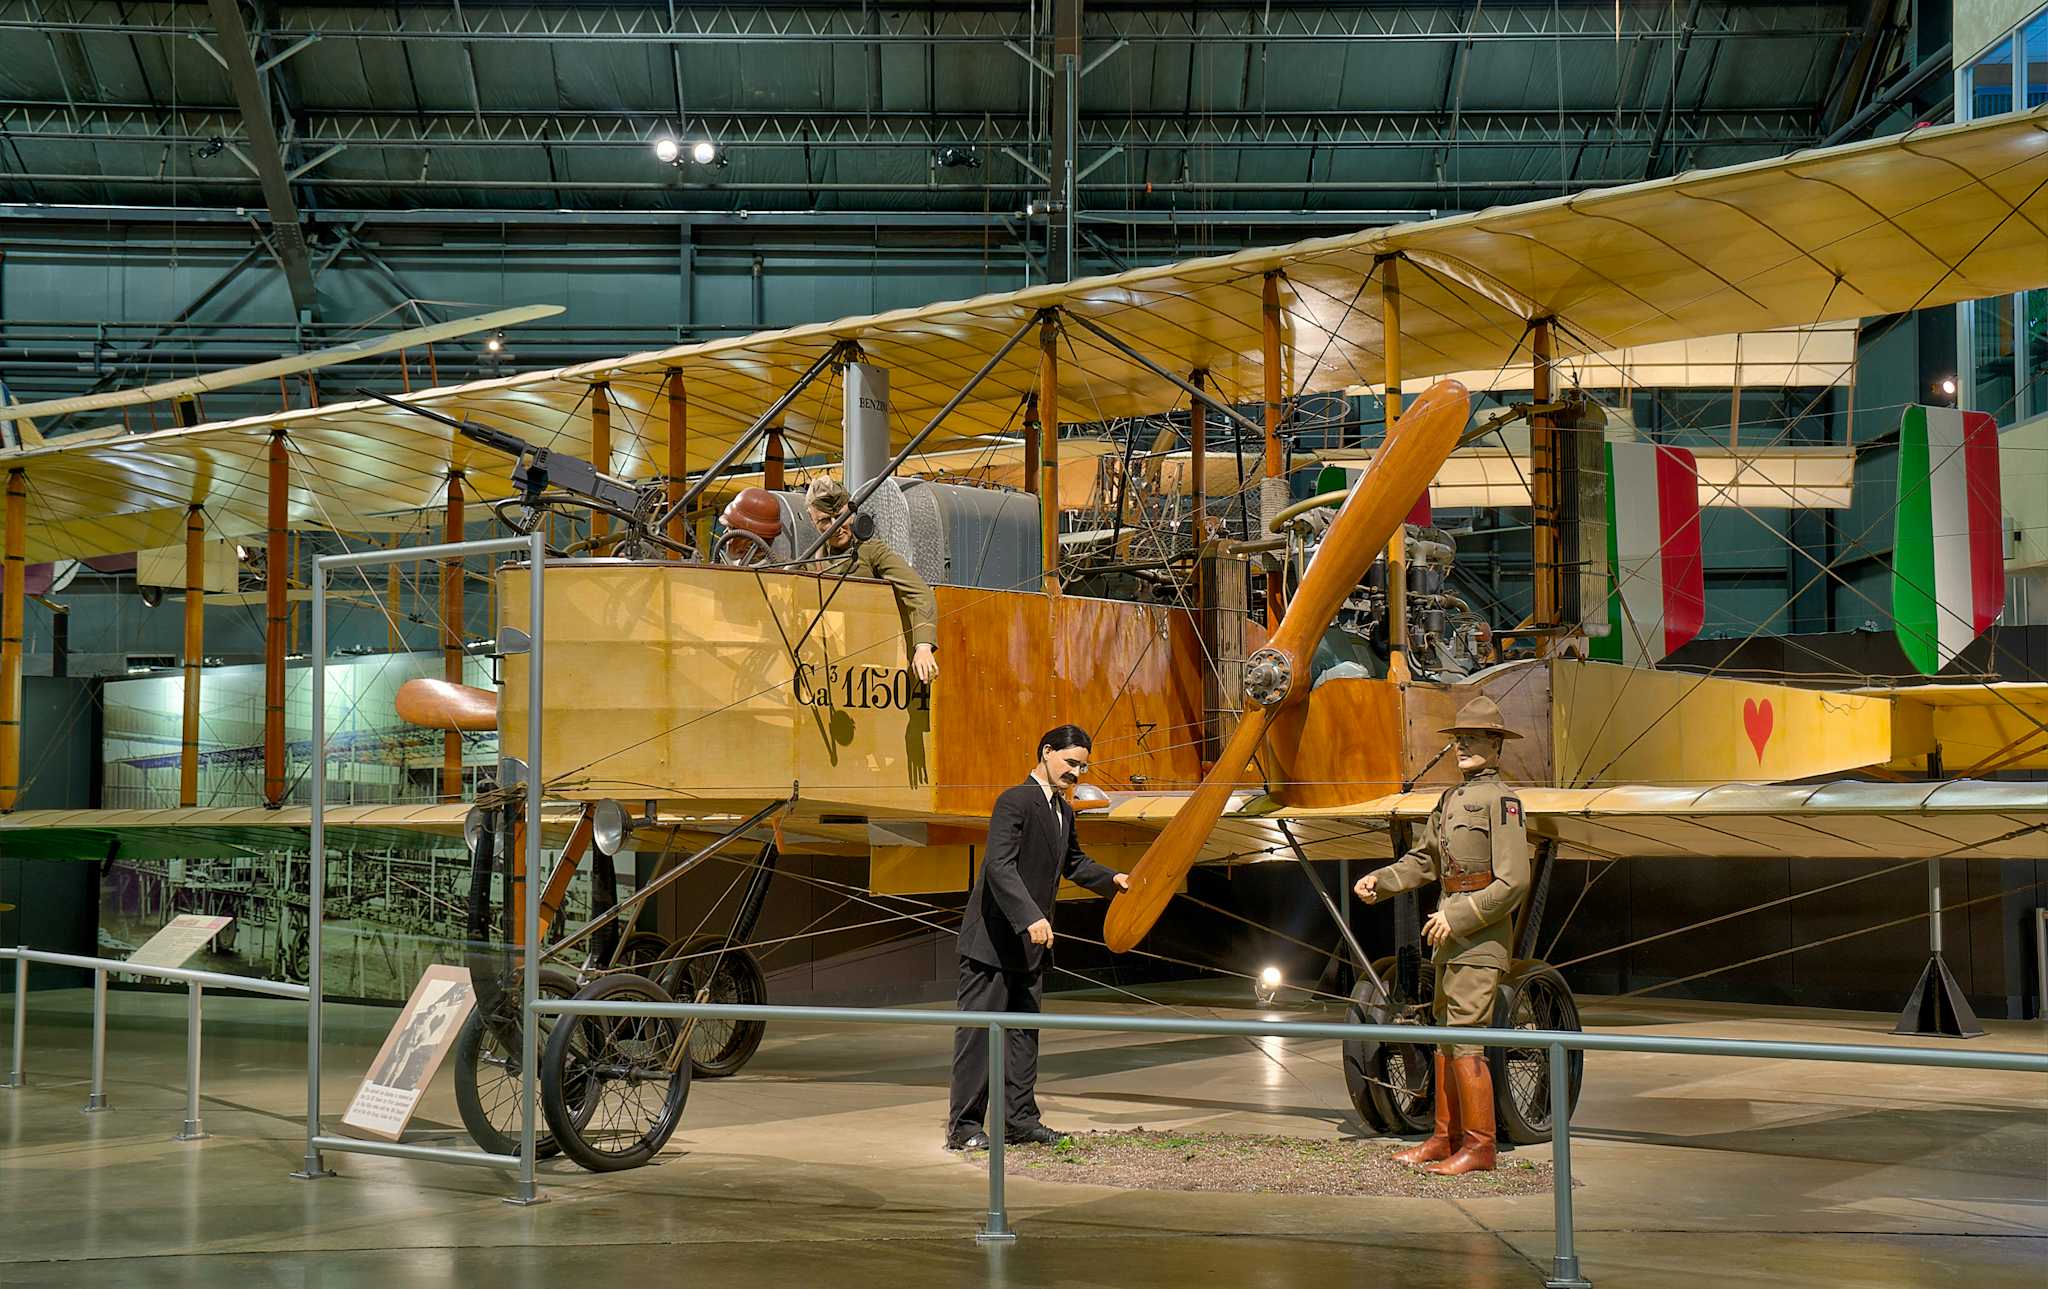 Gianni Caproni Museum of Aeronautics